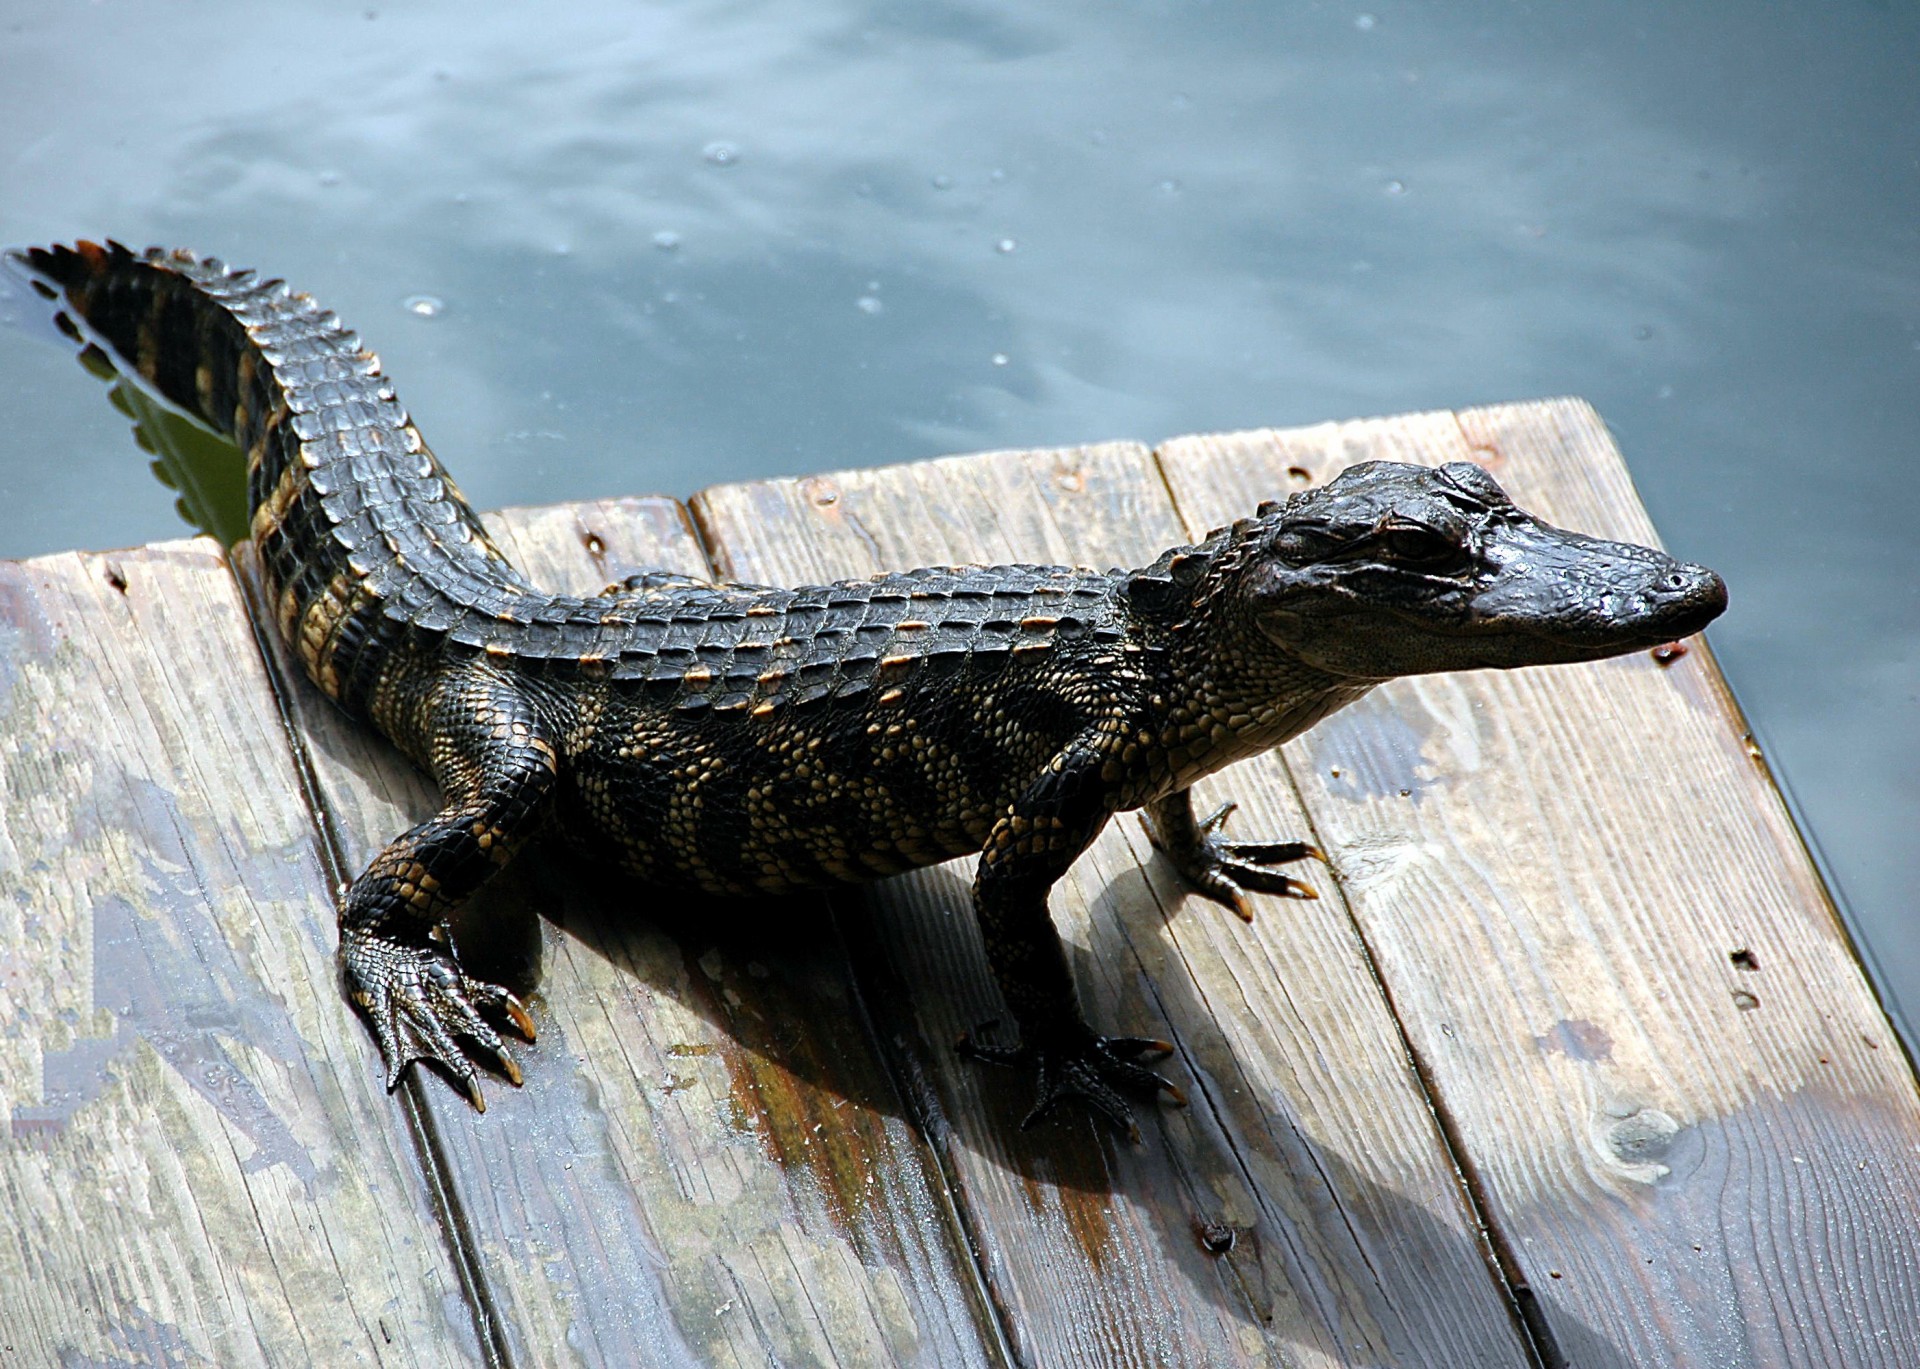 Alligator on a dock at Florida, USA.